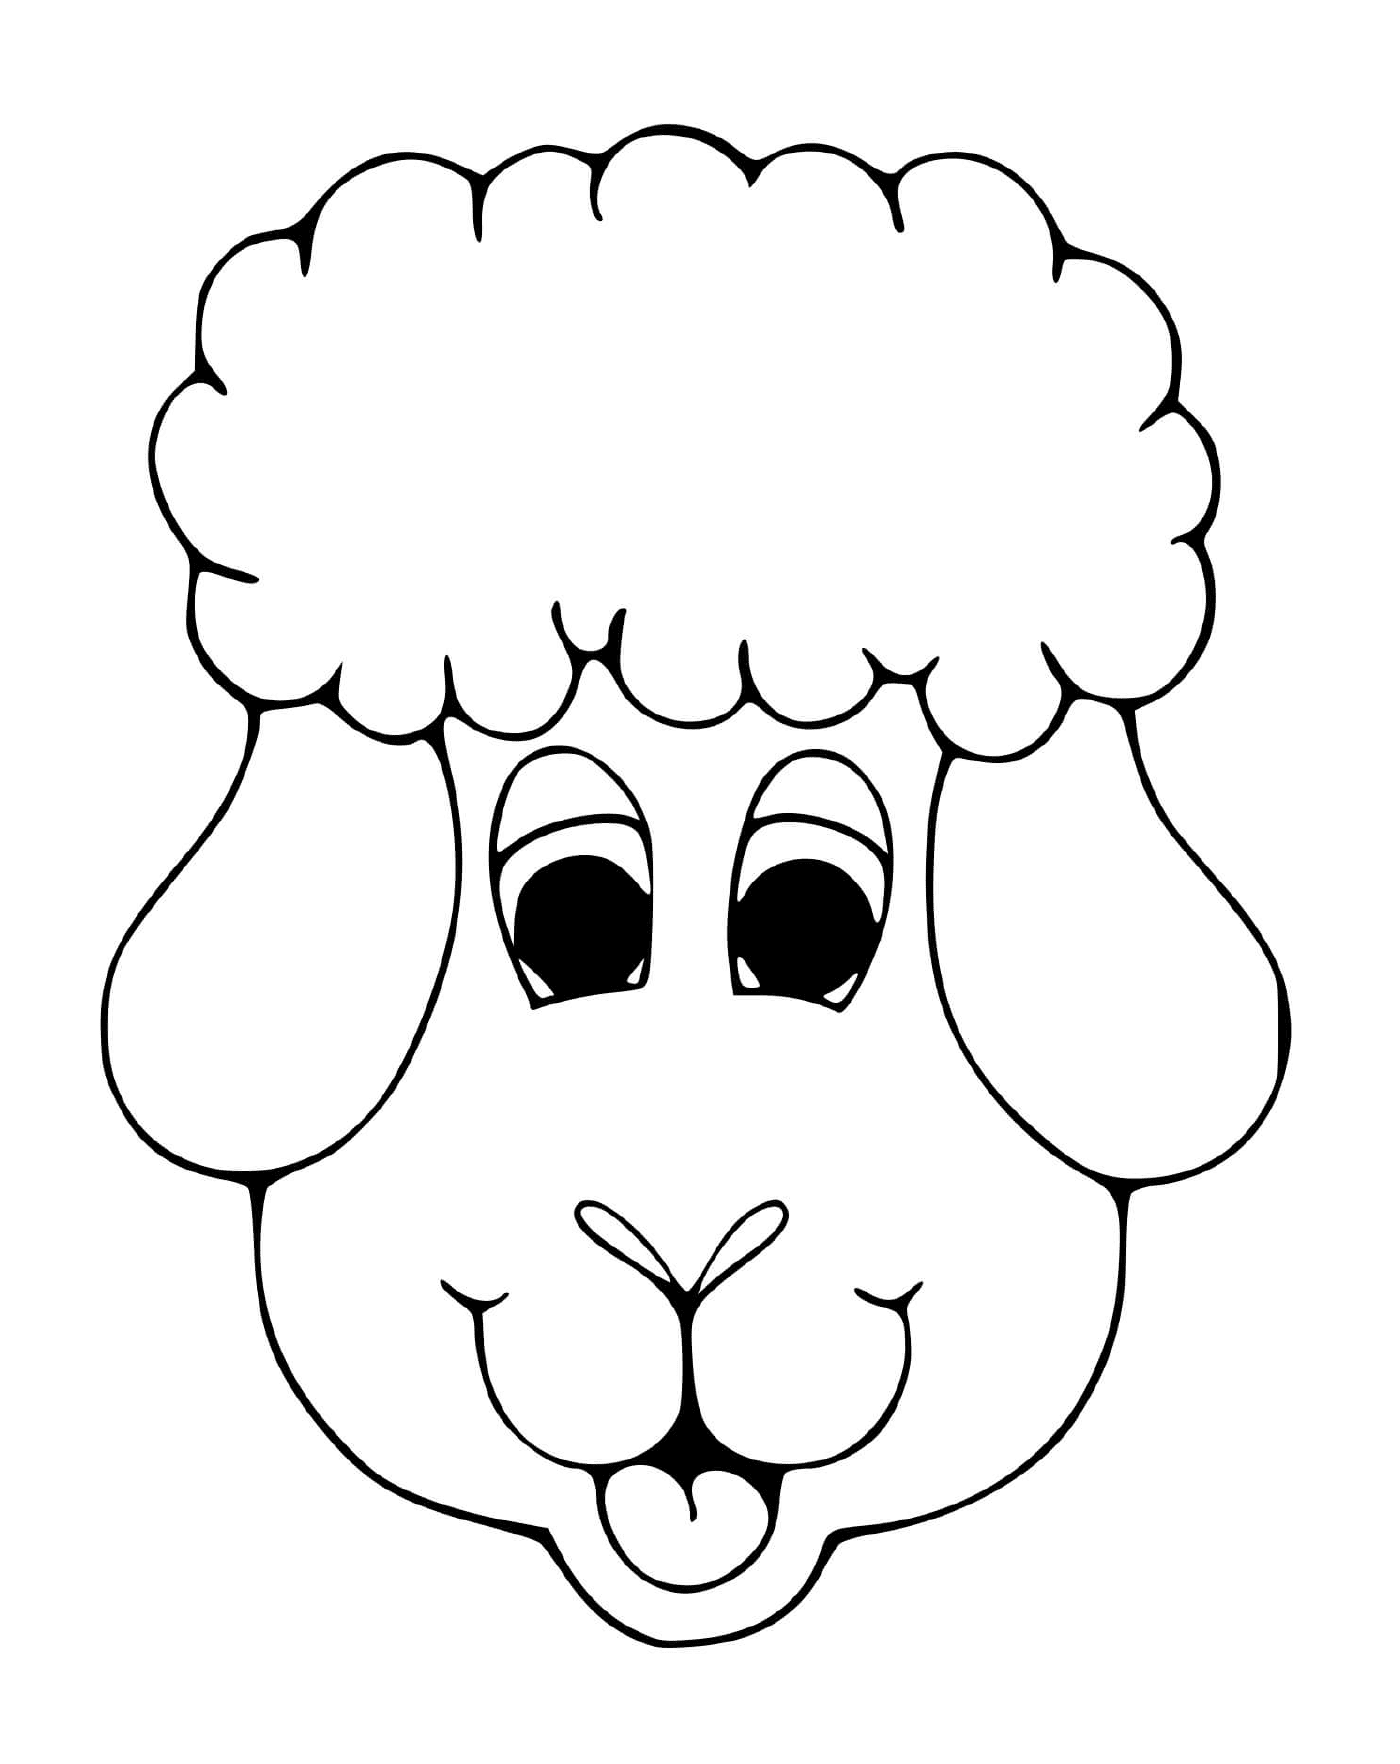  Sweet sheep's eye 